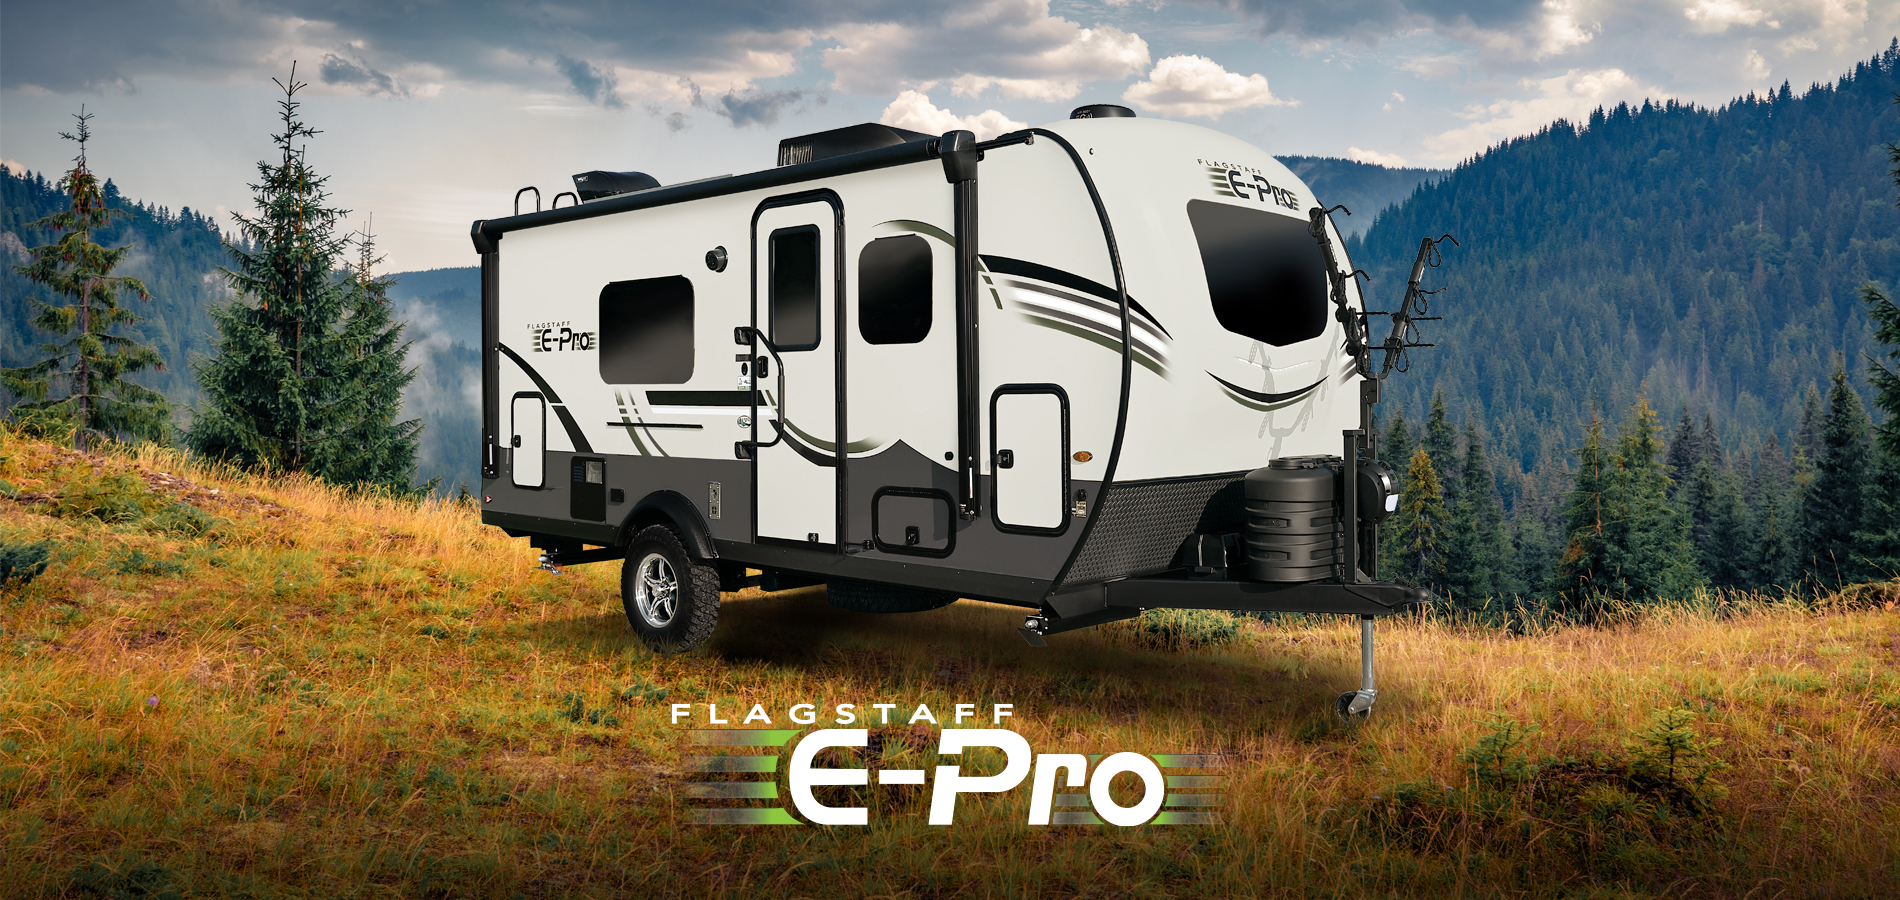 Flagstaff E-Pro RVs